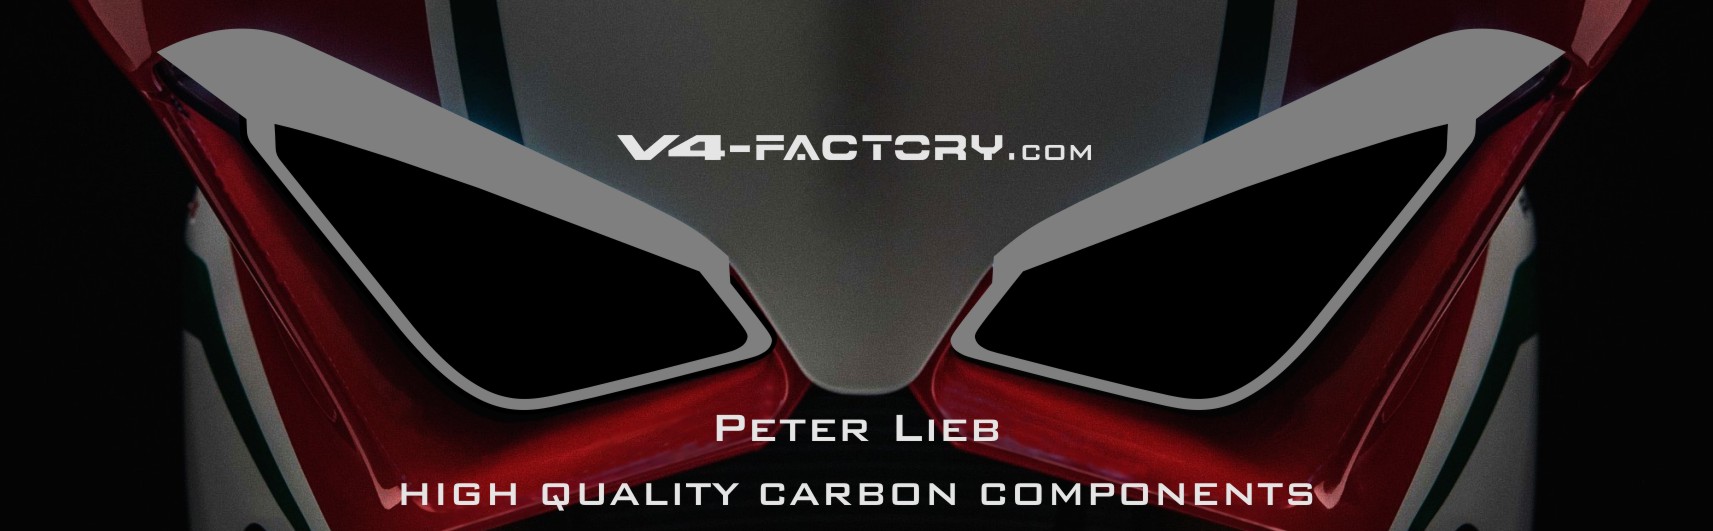 V4-Factory-Logo